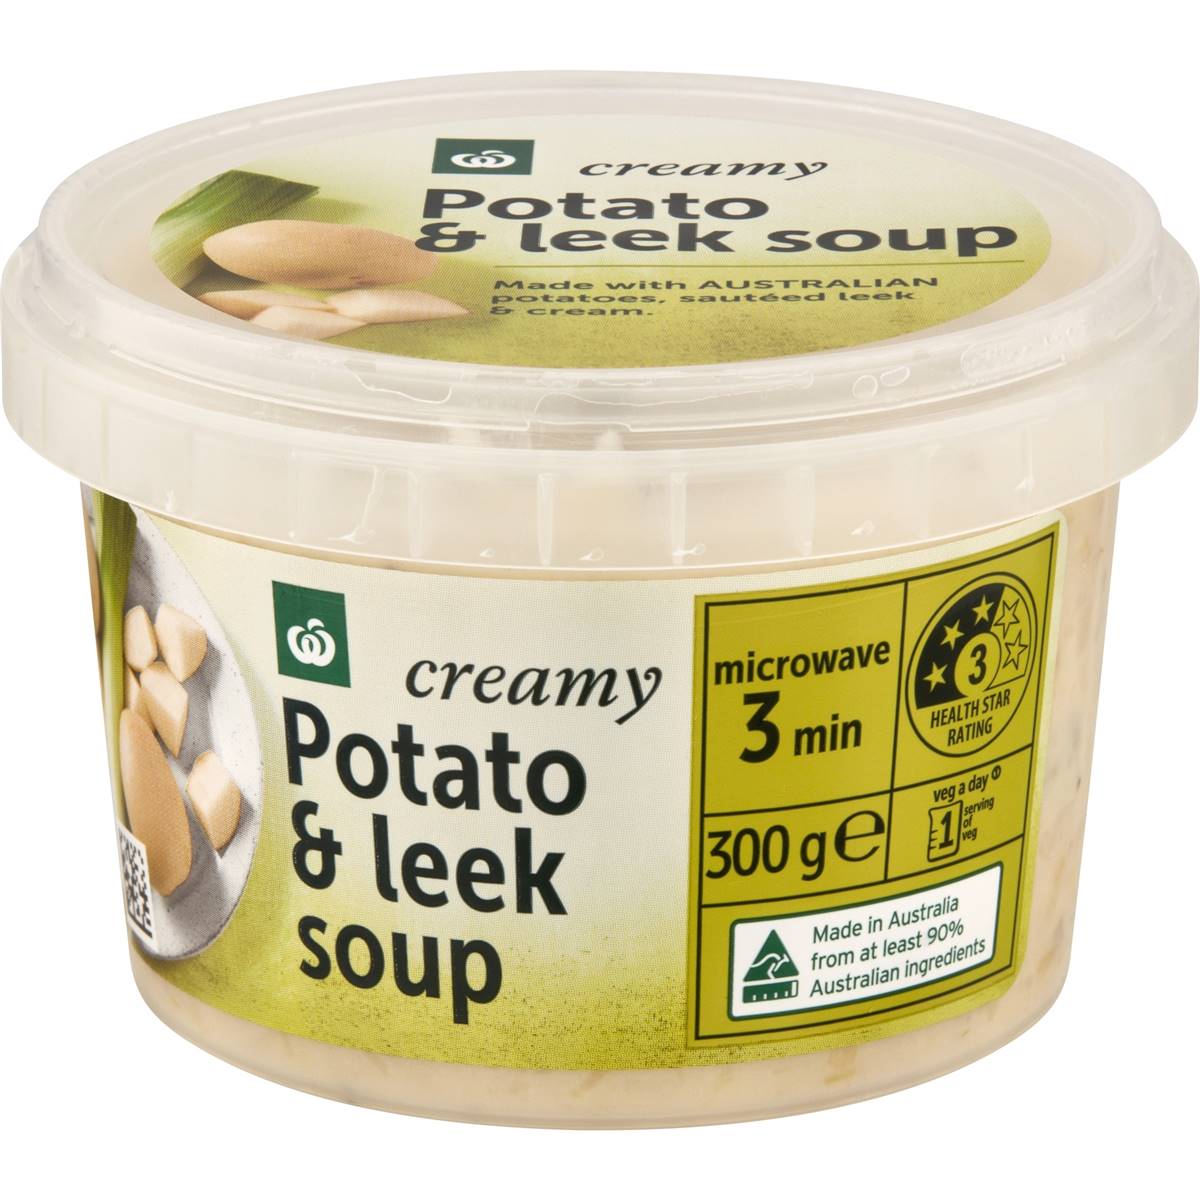 Calories in Woolworths Potato & Leek Soup